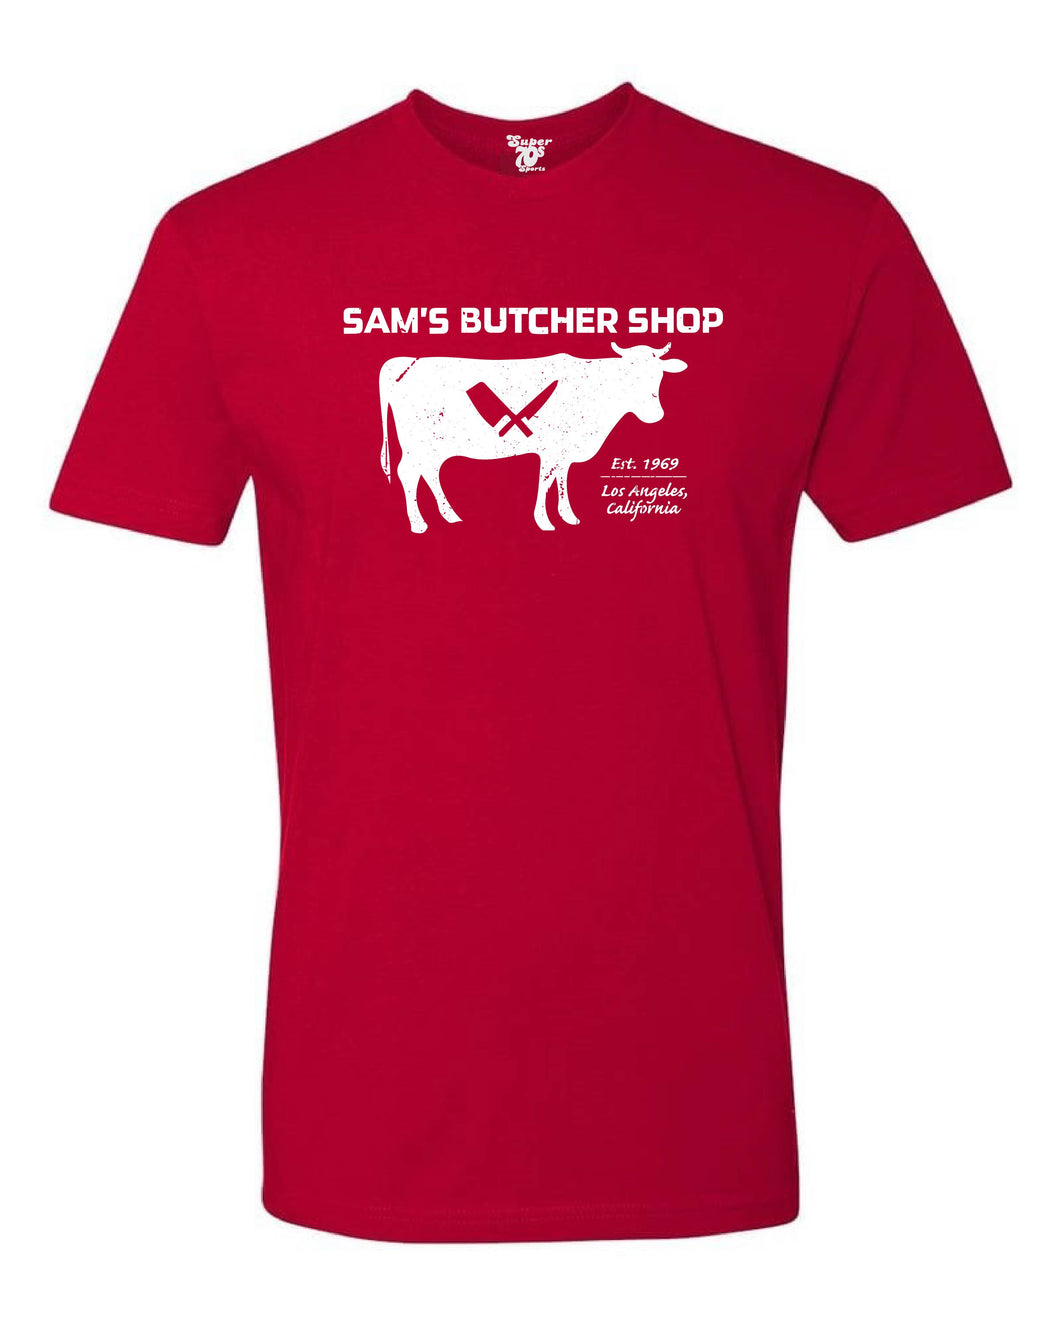 Sam's Butcher Shop Tee